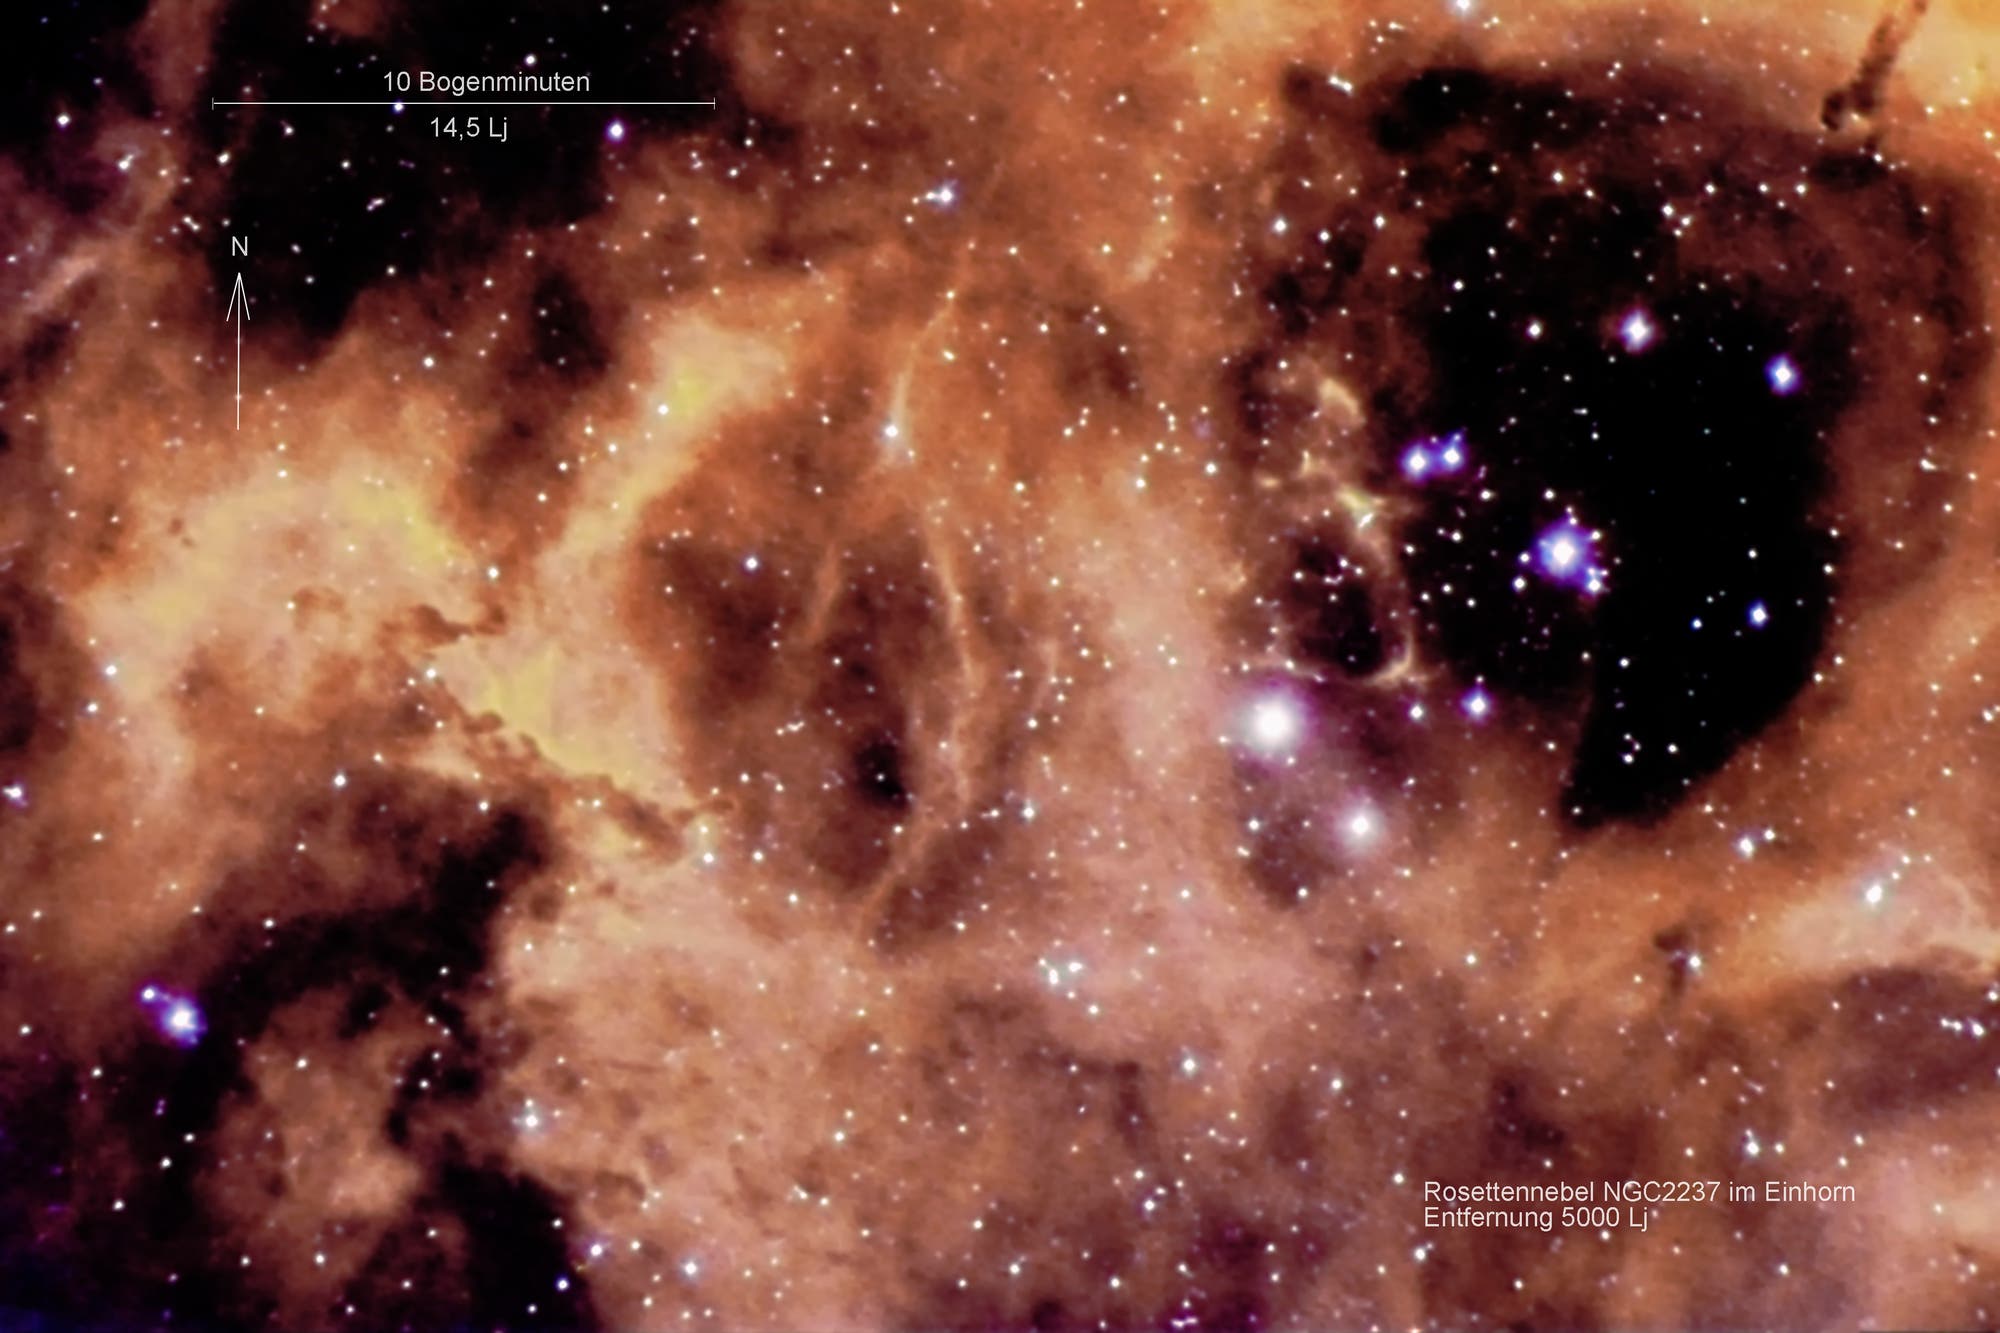 Rosettennebel NGC 2237 mit offenem Sternhaufen NGC 2244